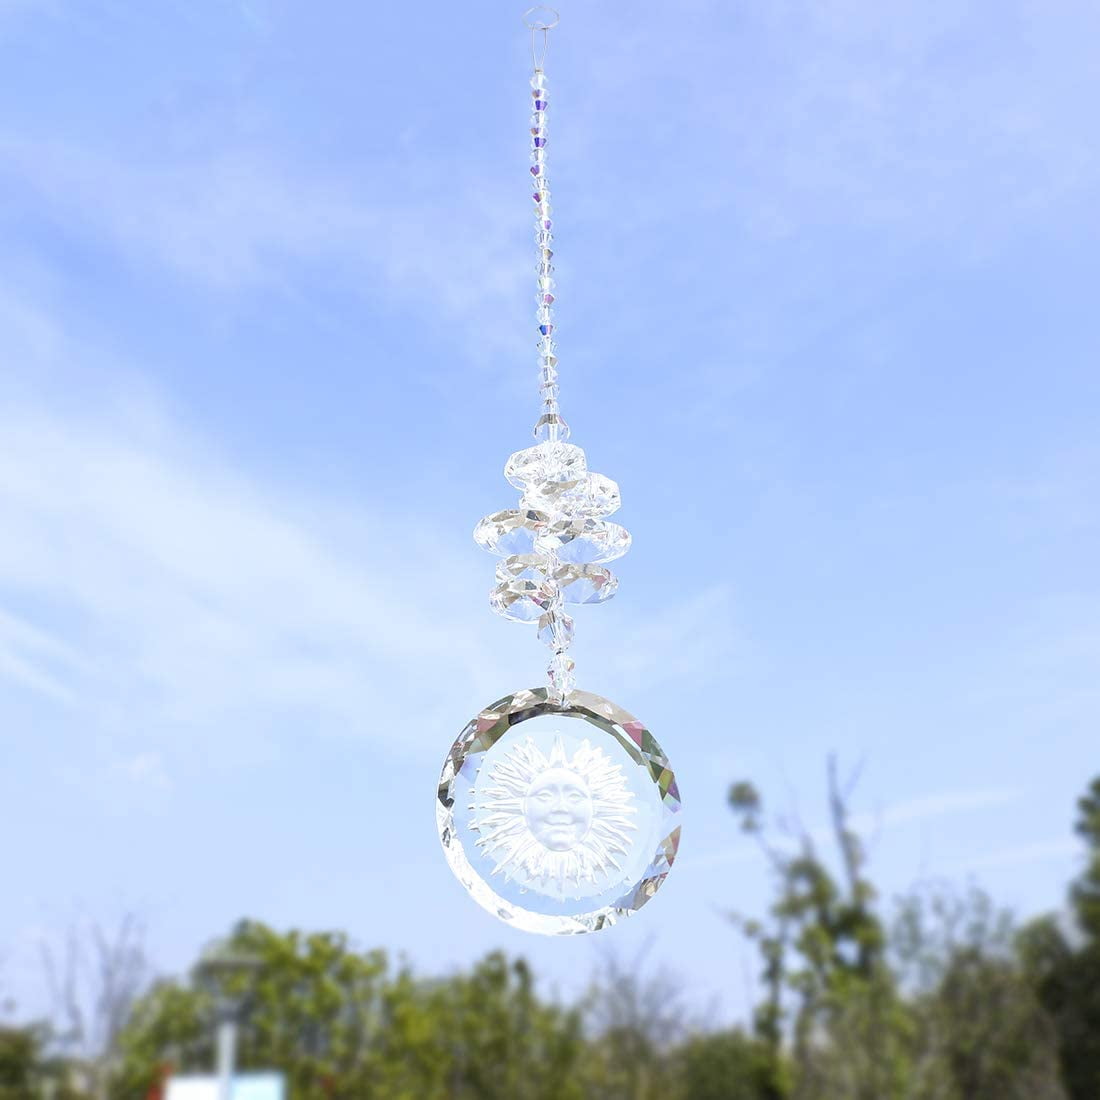 LTD ADE1702300 H&D Crystal Manufacture CO White1 H&D Rear View Mirror Car Charm Ornament Hanging Prism Suncatcher